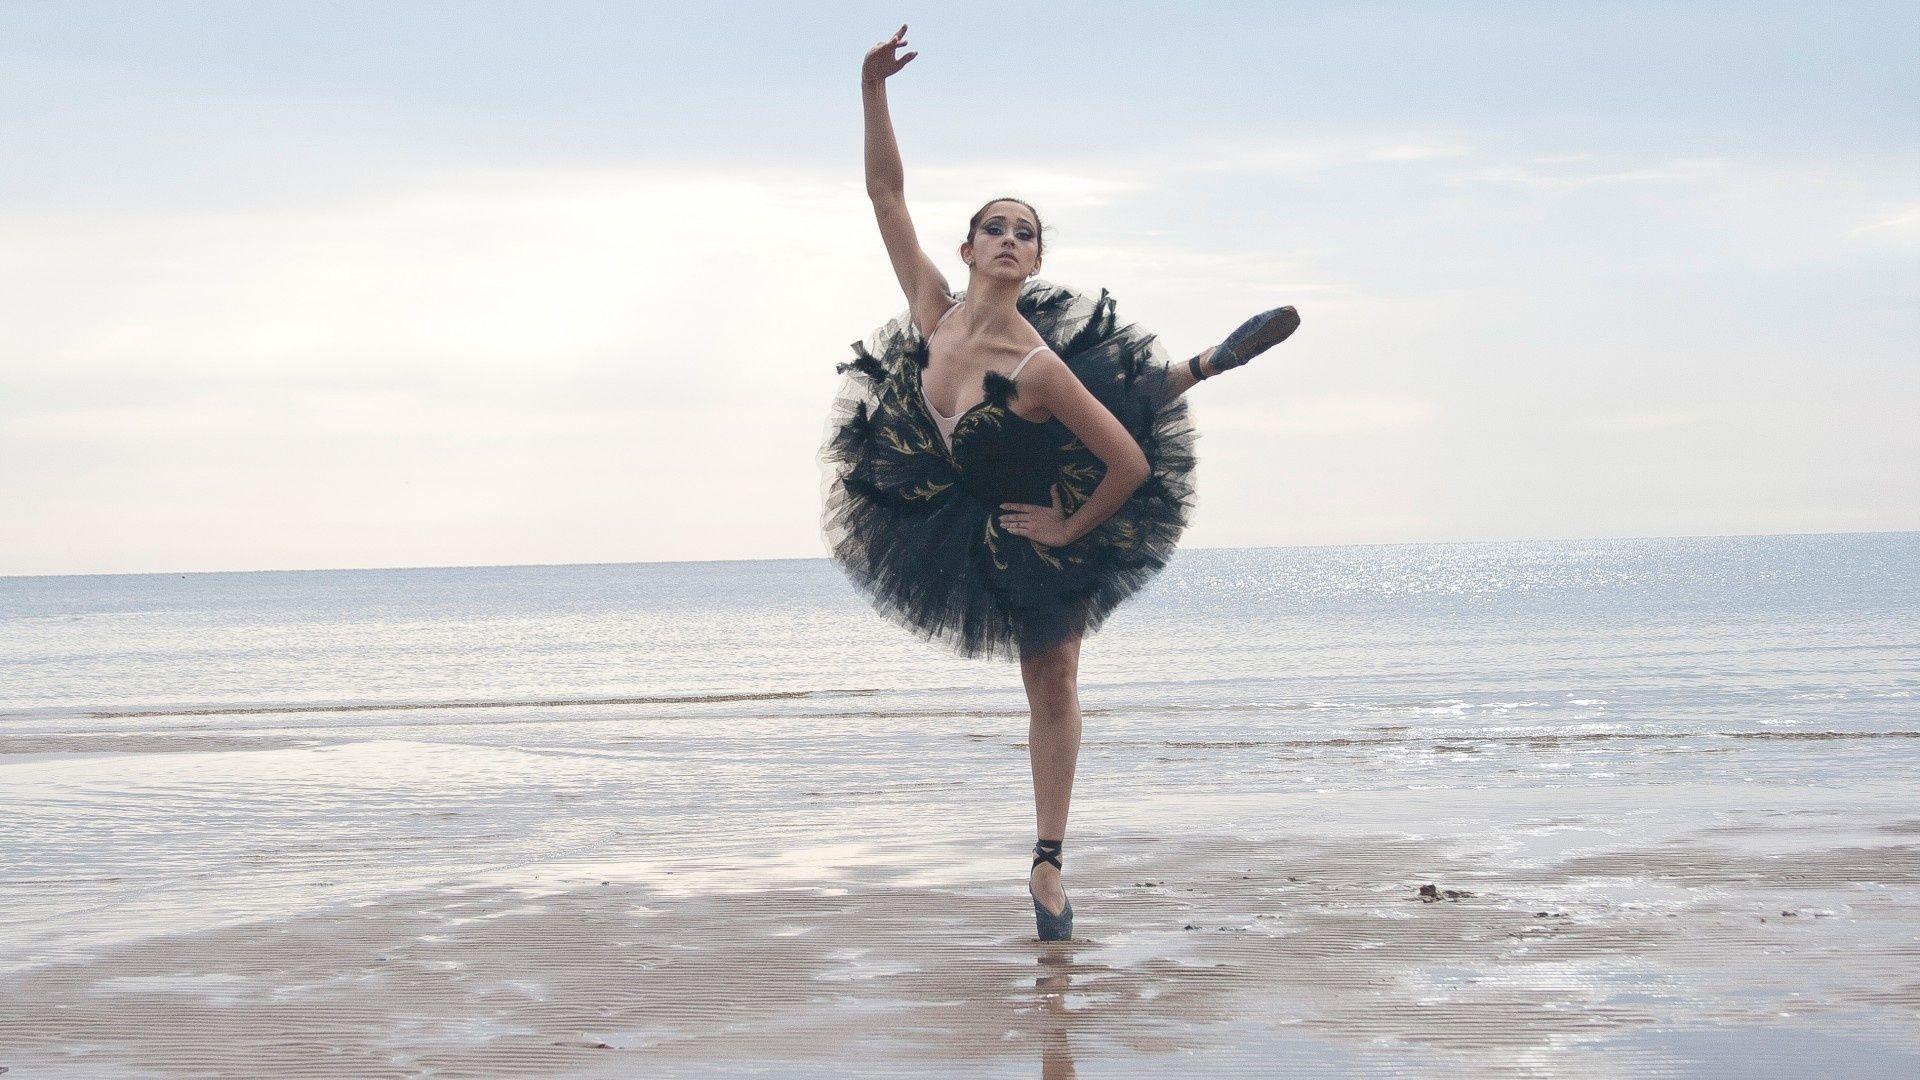 Top Pics: Amazing Ballerina Image Collection